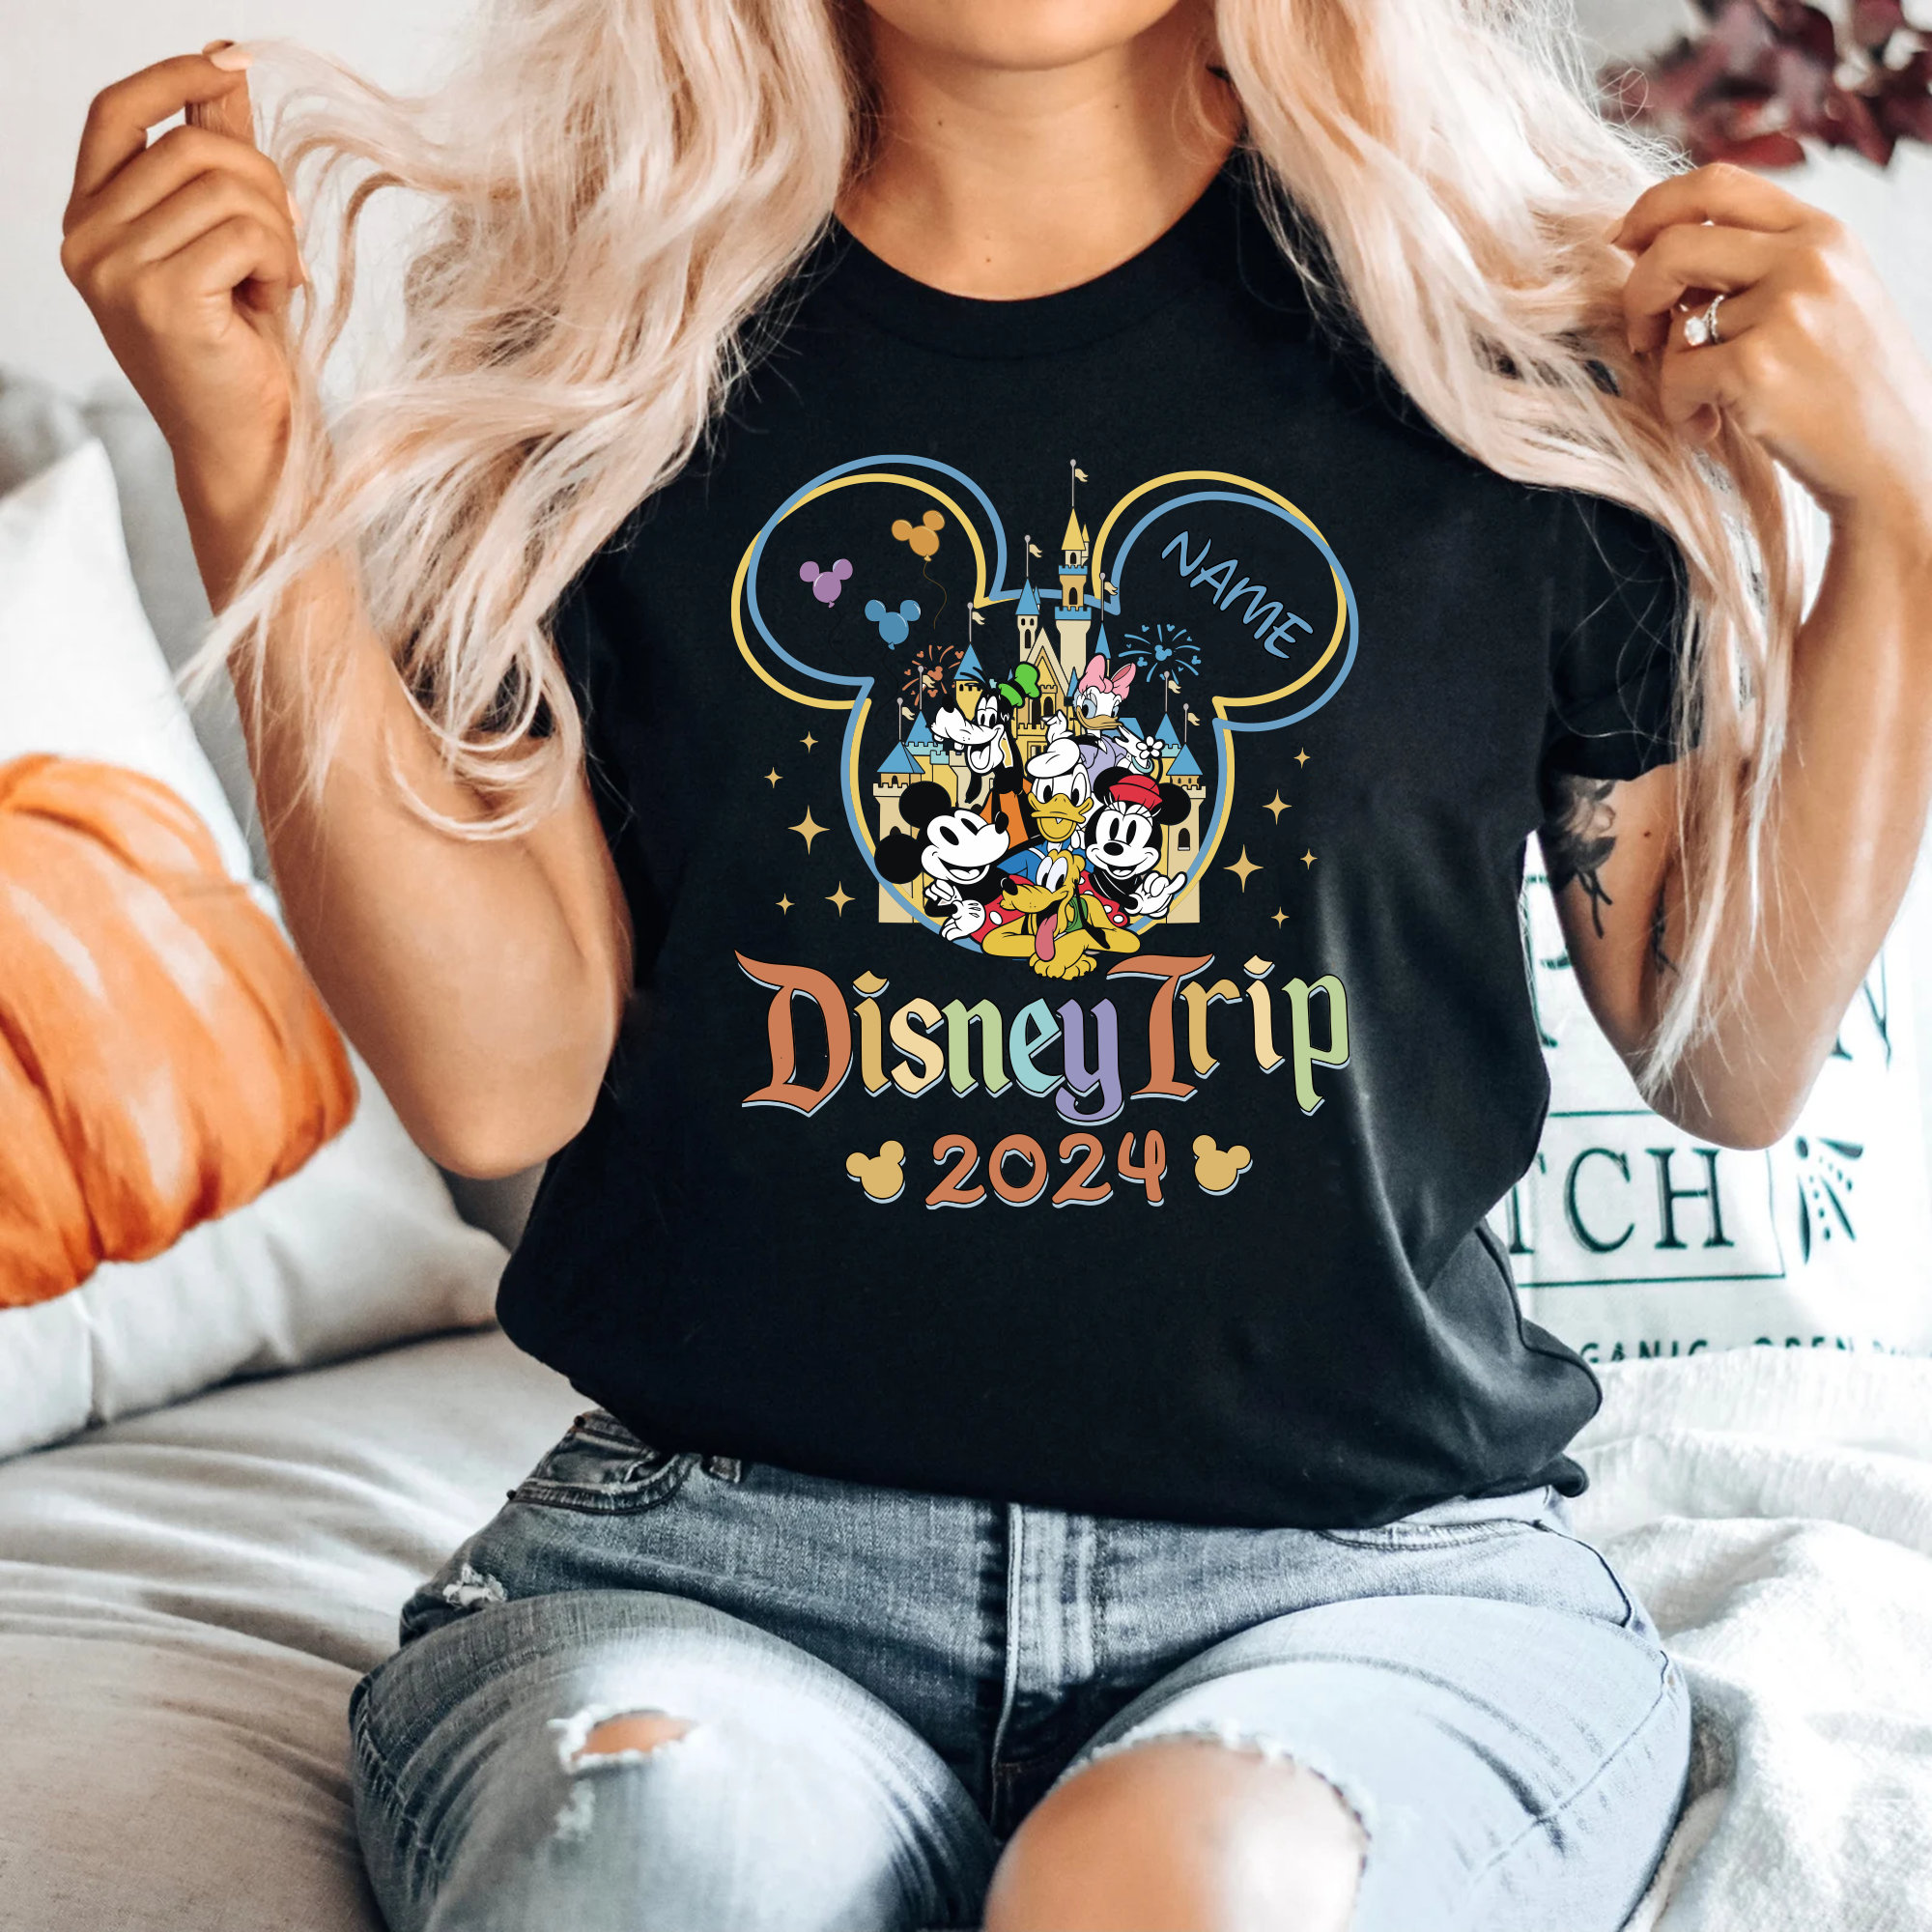 Disney 2024 Shirts, Disneyworld Shirts, Disney Vacation T-shirt, Disney Couple